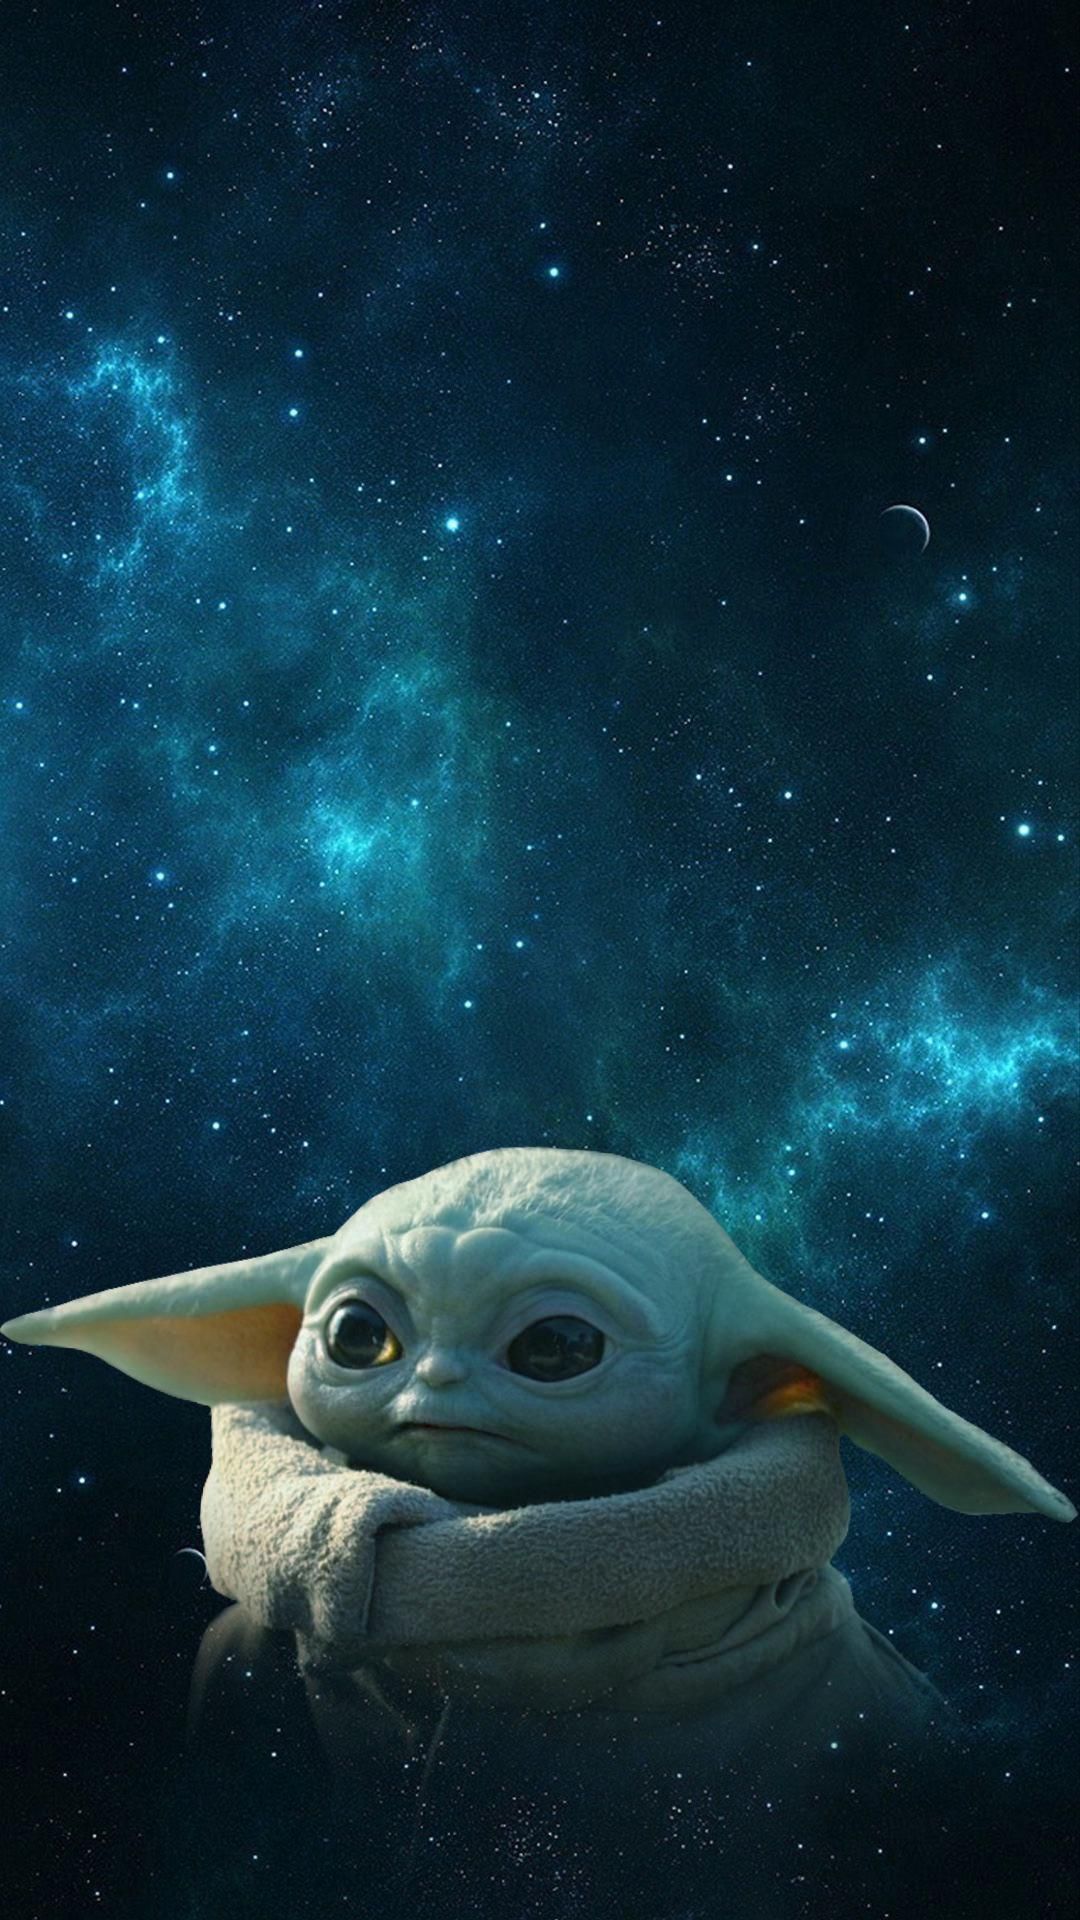 Google Image Result. Yoda wallpaper, Yoda picture, Yoda image